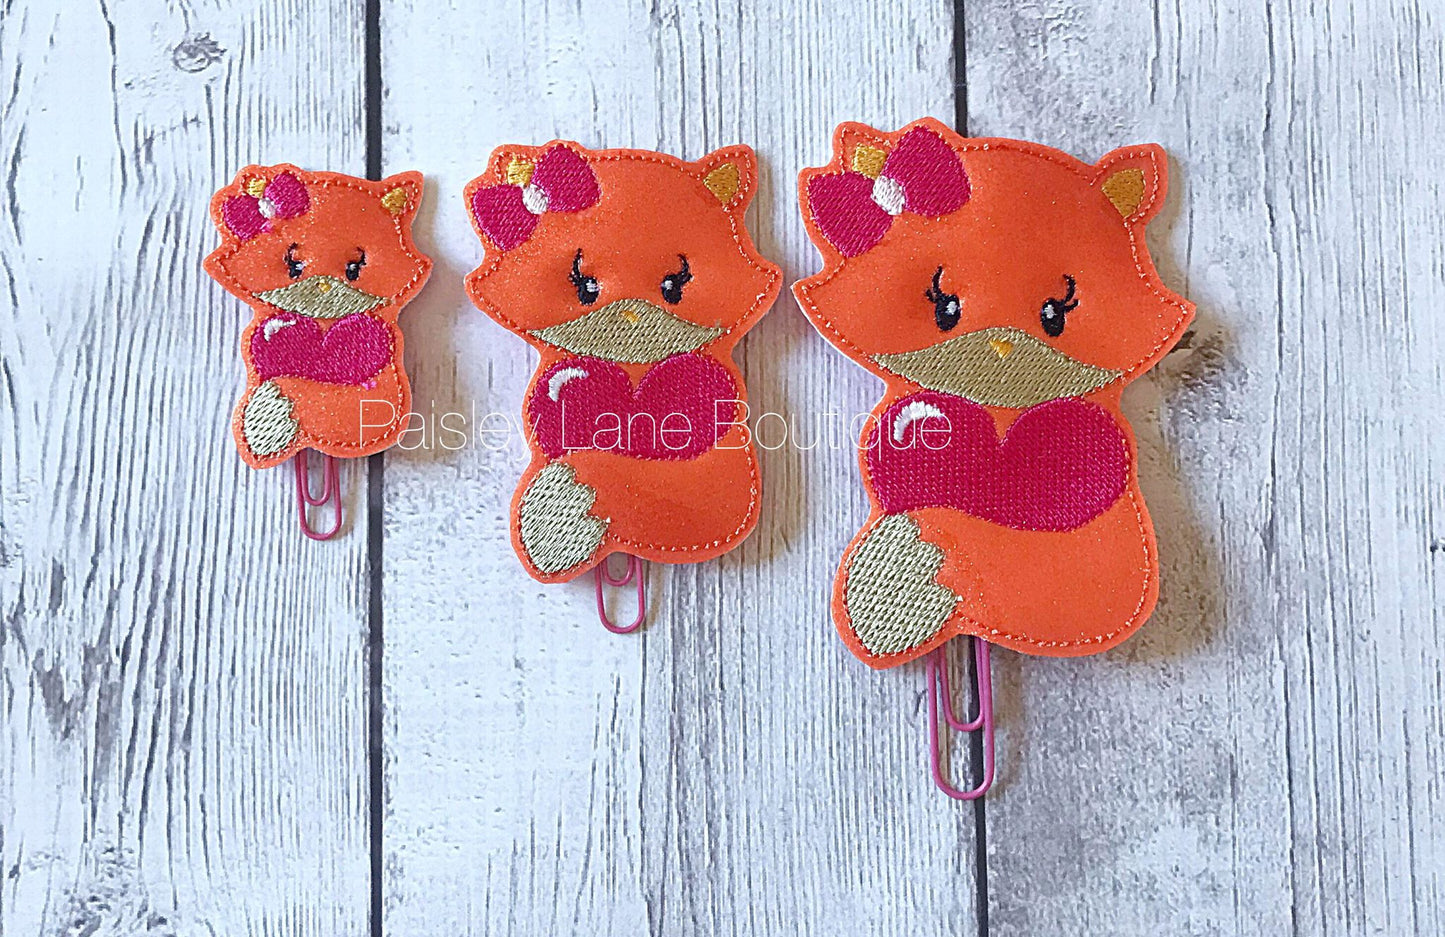 Valentine Girl Fox Felties - 3 sizes- Digital Embroidery Design